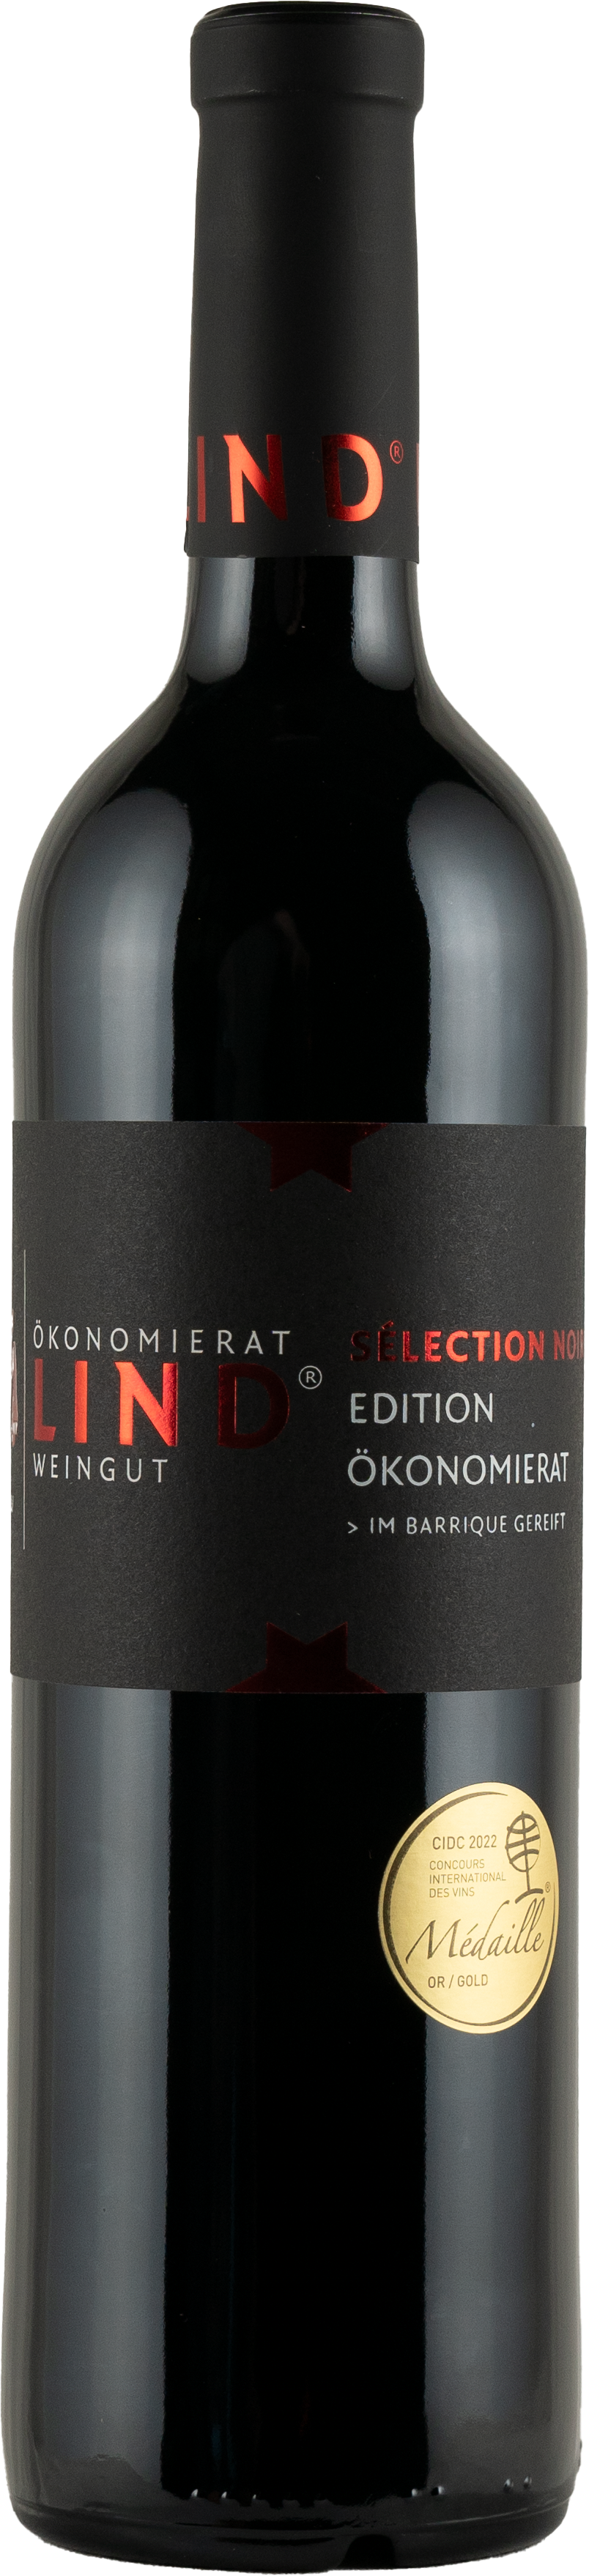 2016 Edition Ökonomierat rot Sélection Noir trocken 0,75 L - Ökonomierat Lind